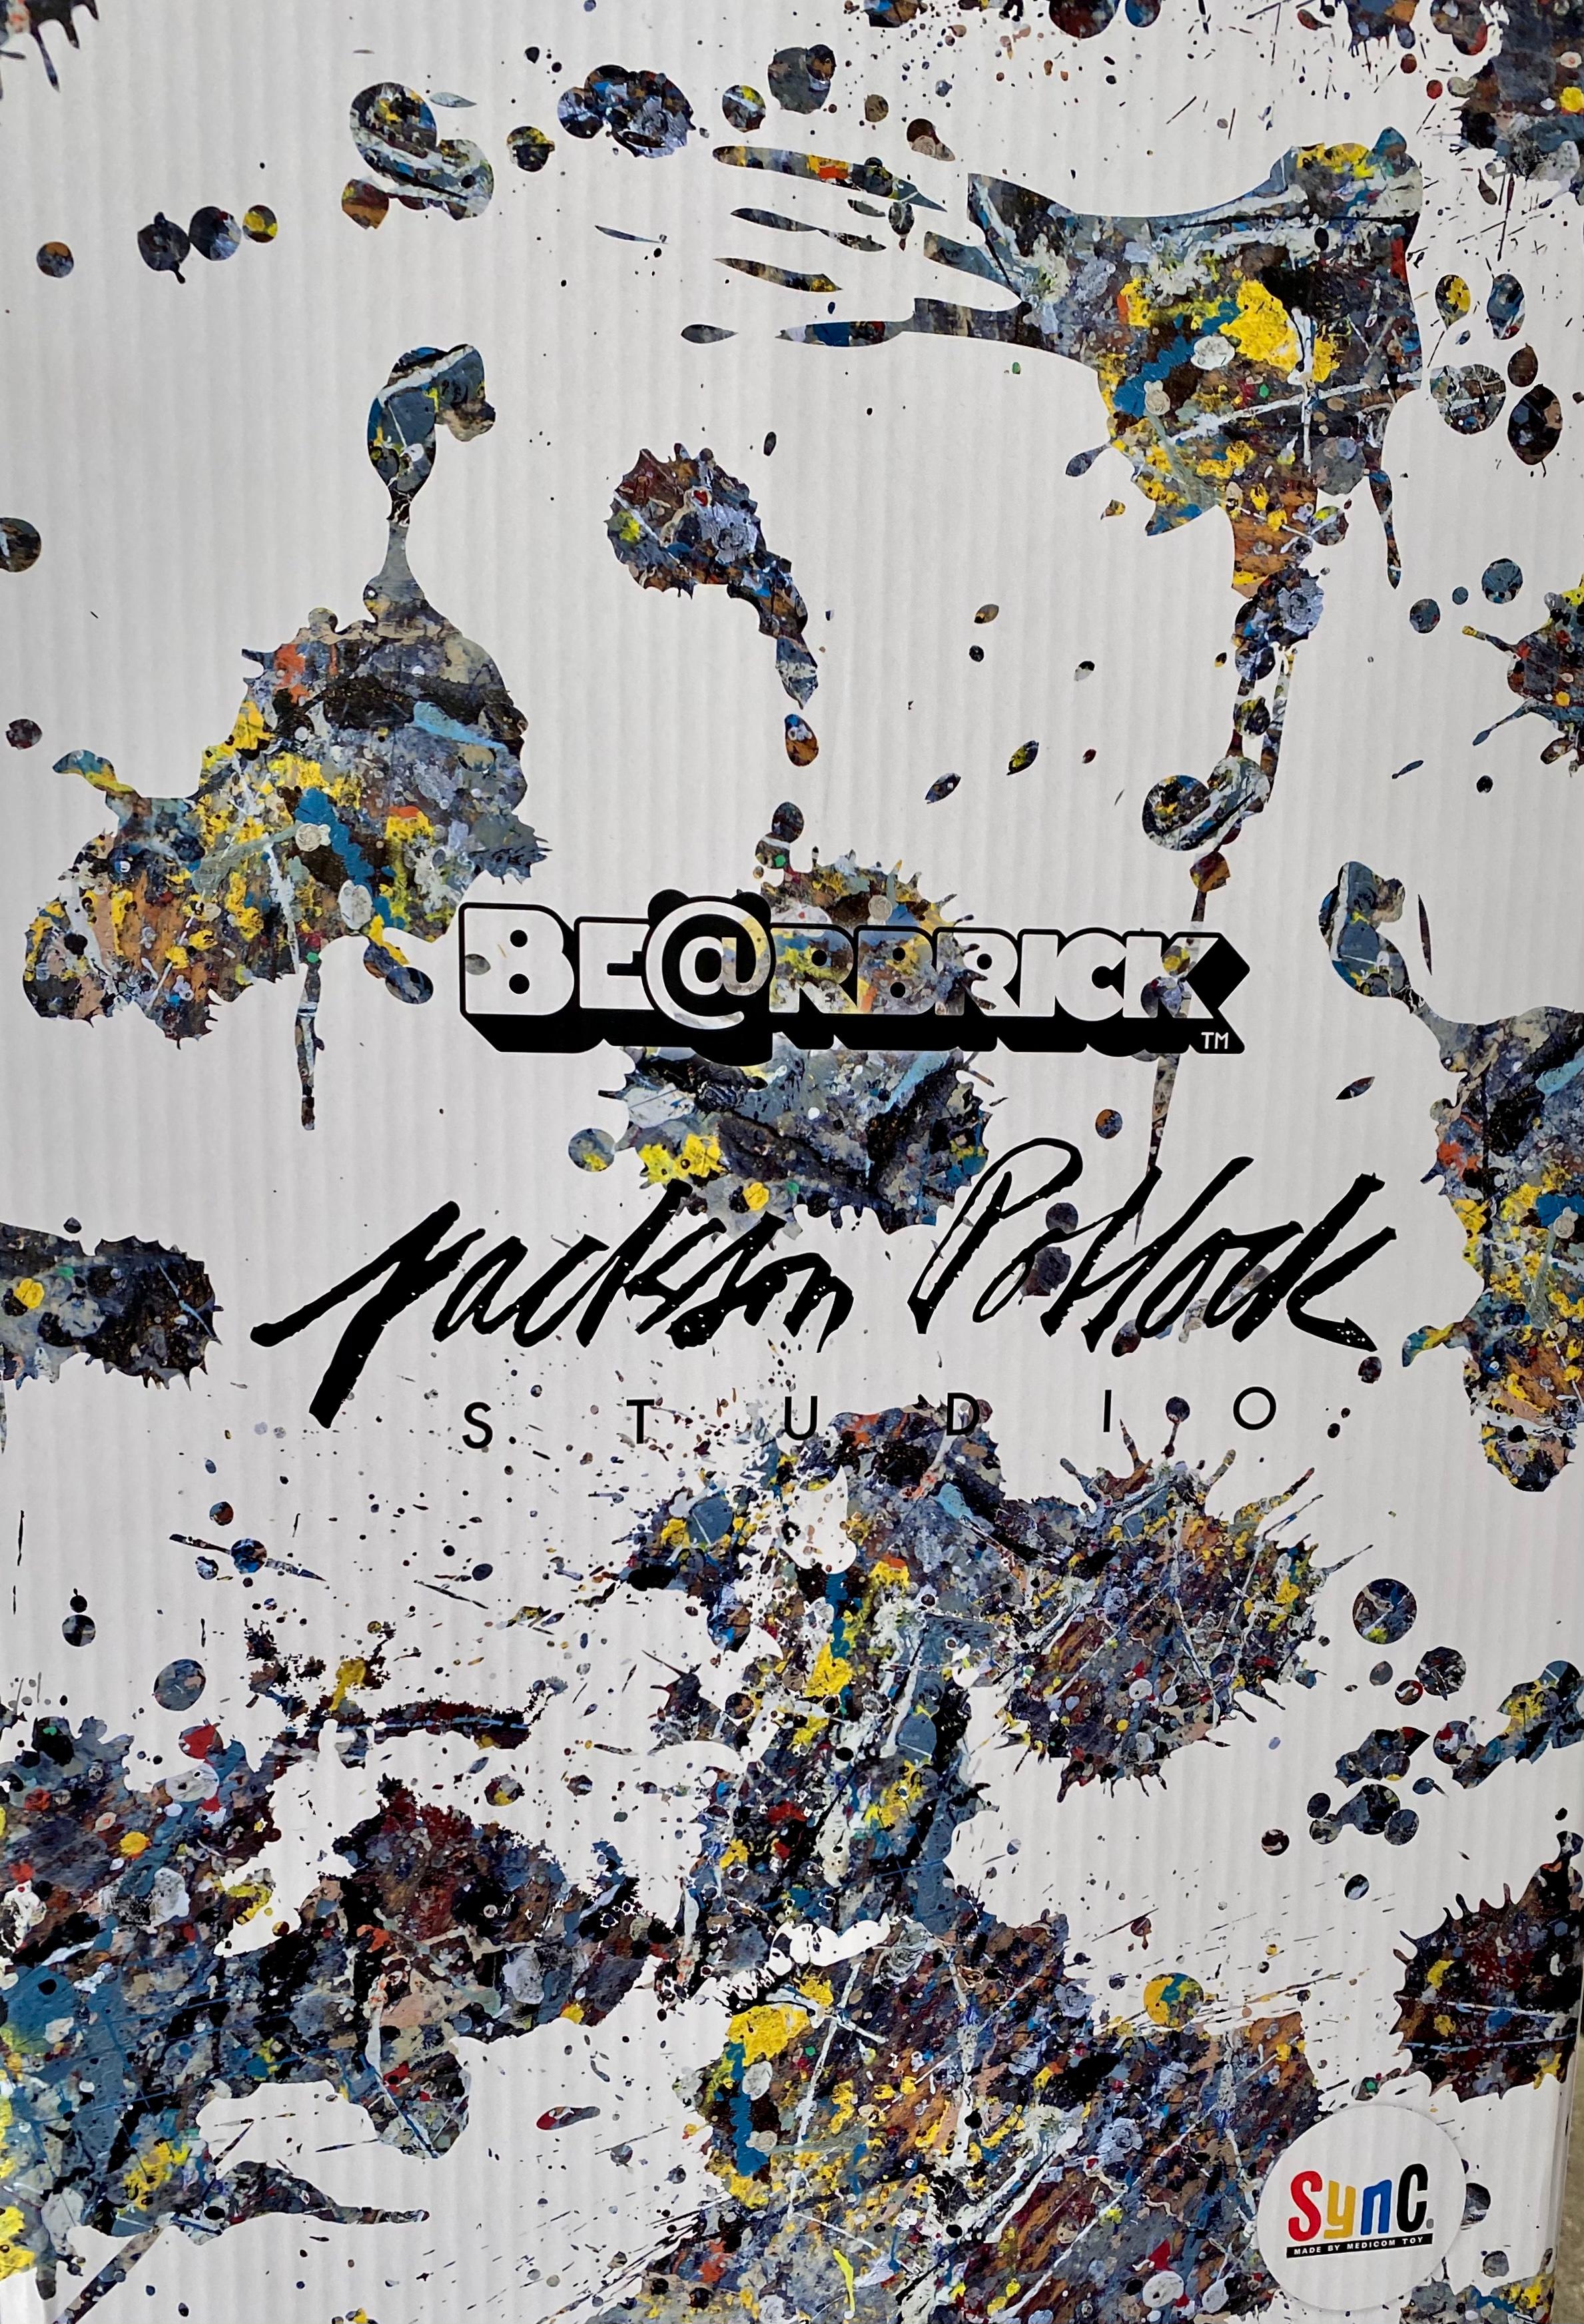 Jackson Pollock Bearbrick 1000% figure (Jackson Pollock BE@RBRICK) - Pop Art Print by (after) Jackson Pollock 